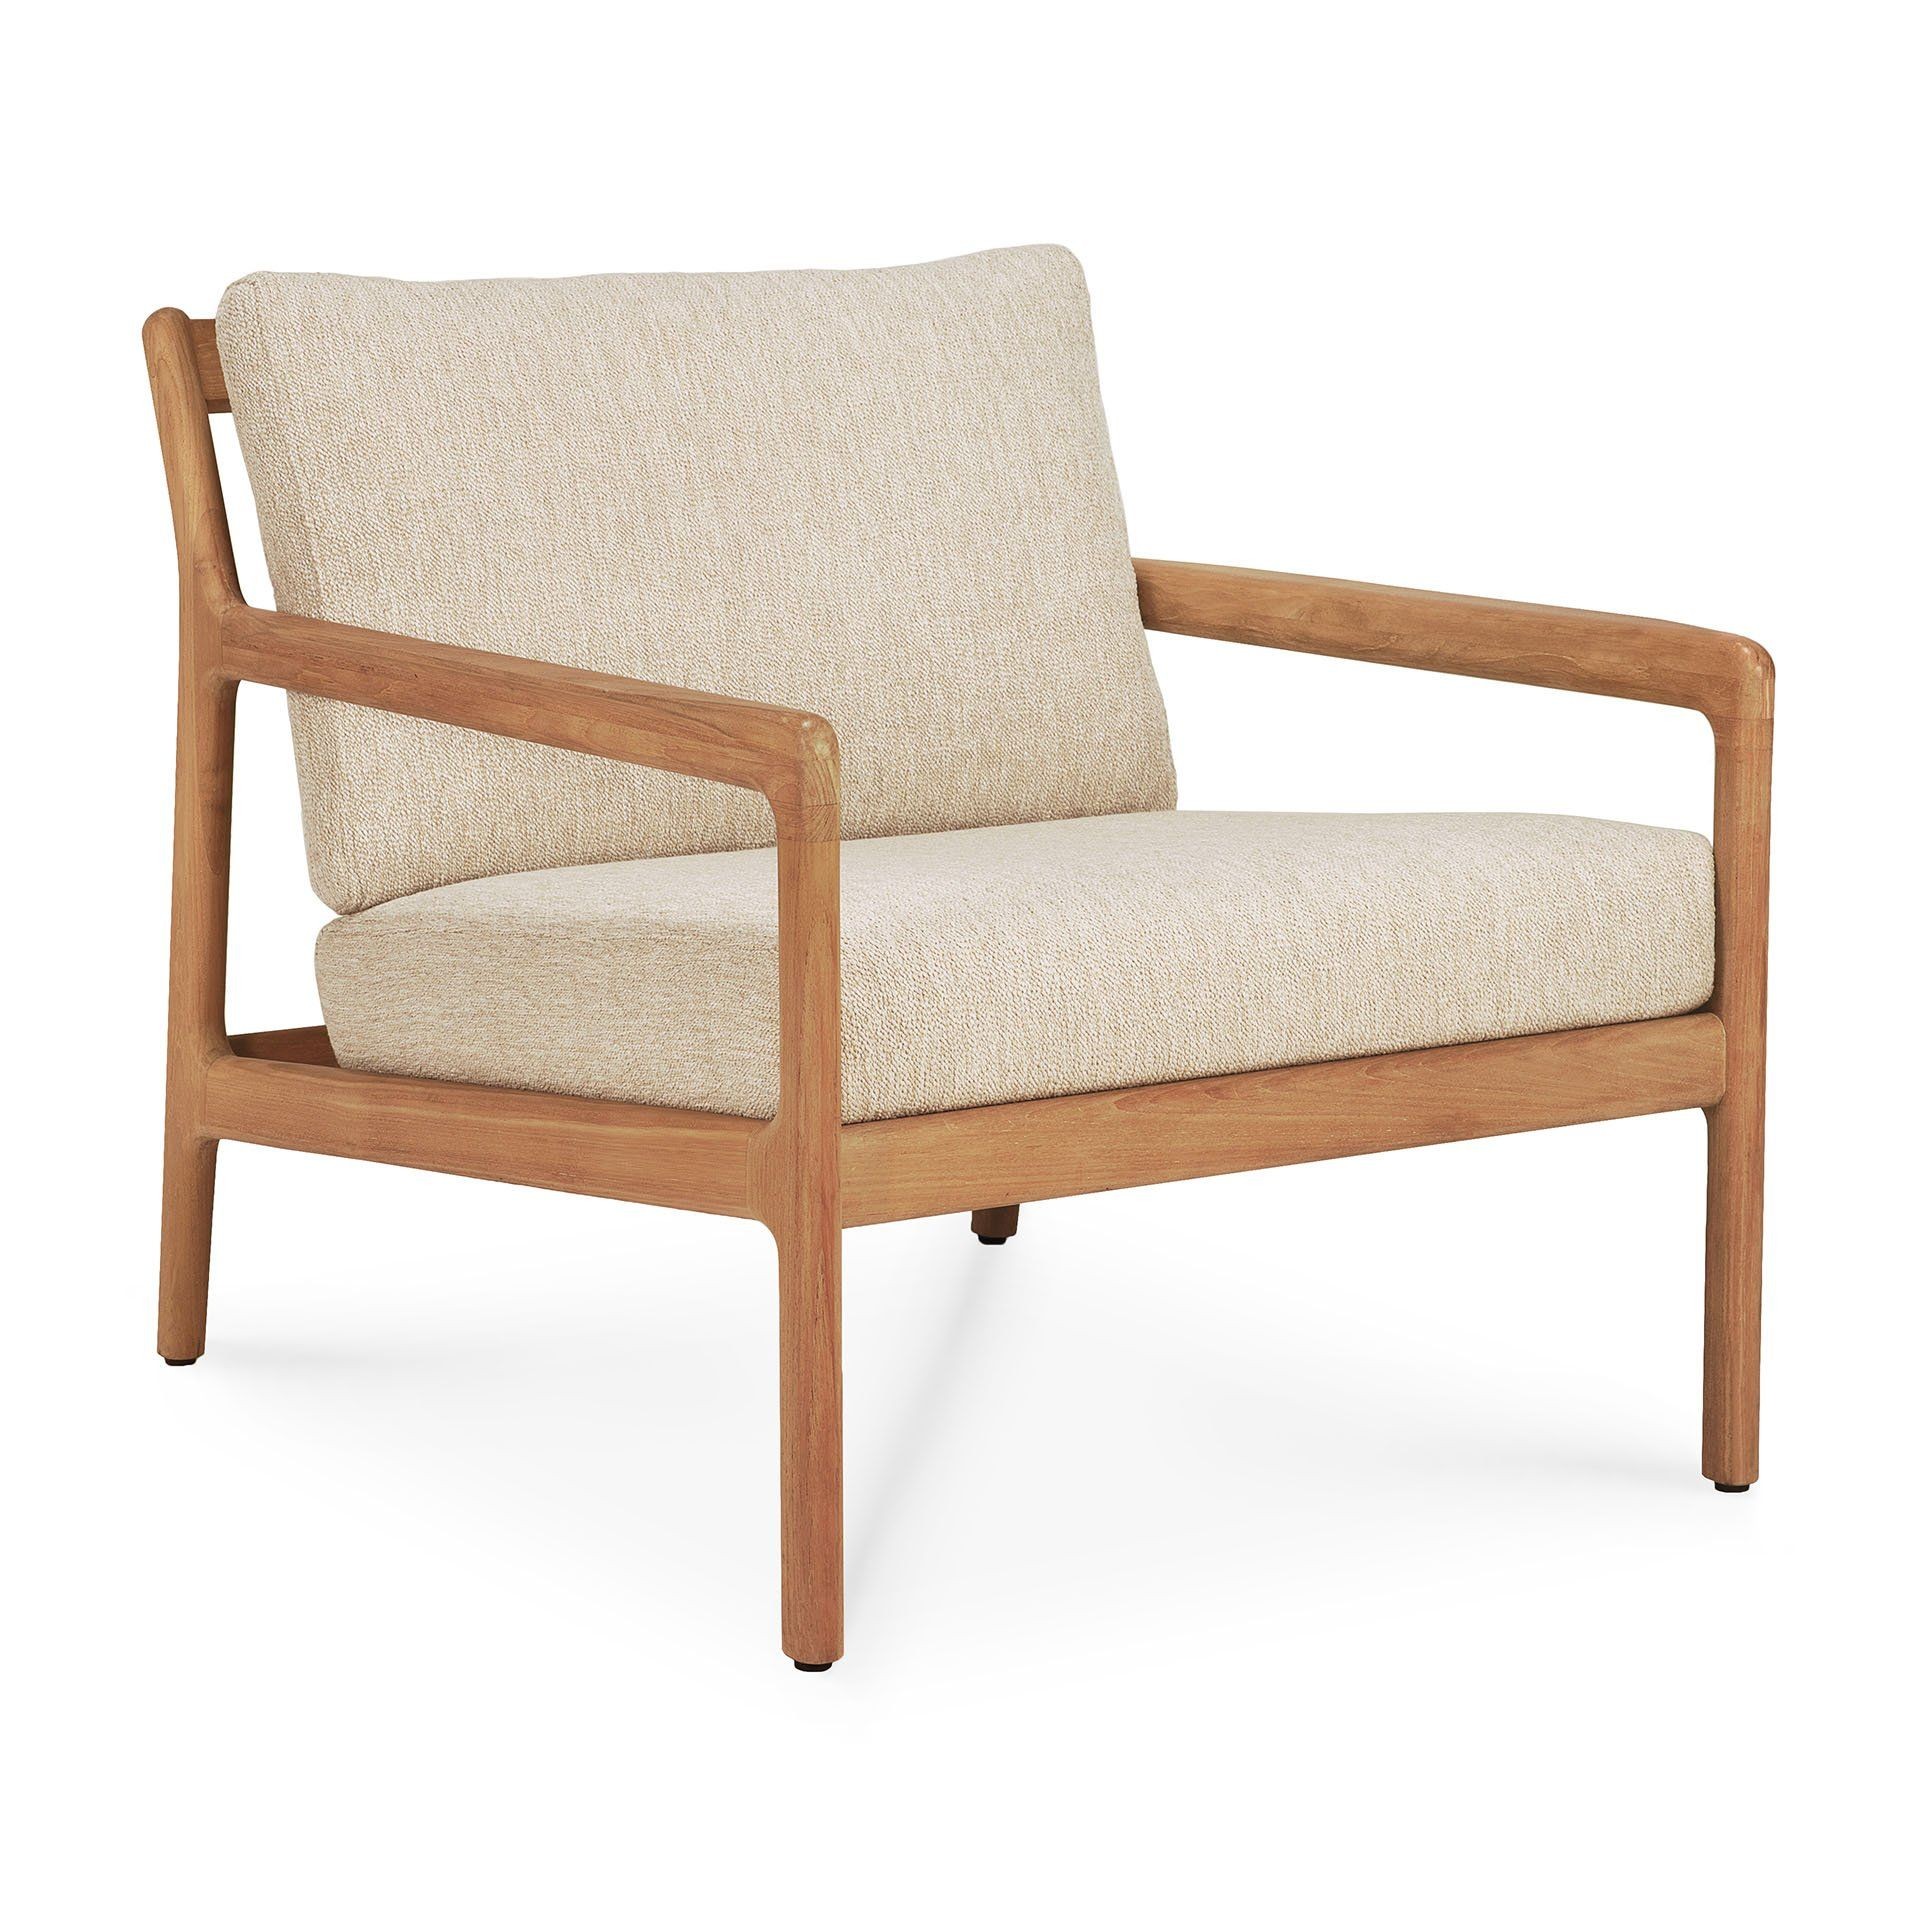 Ethnicraft Teak Jack Outdoor Lounge Chair - 76 cm - Natural--8